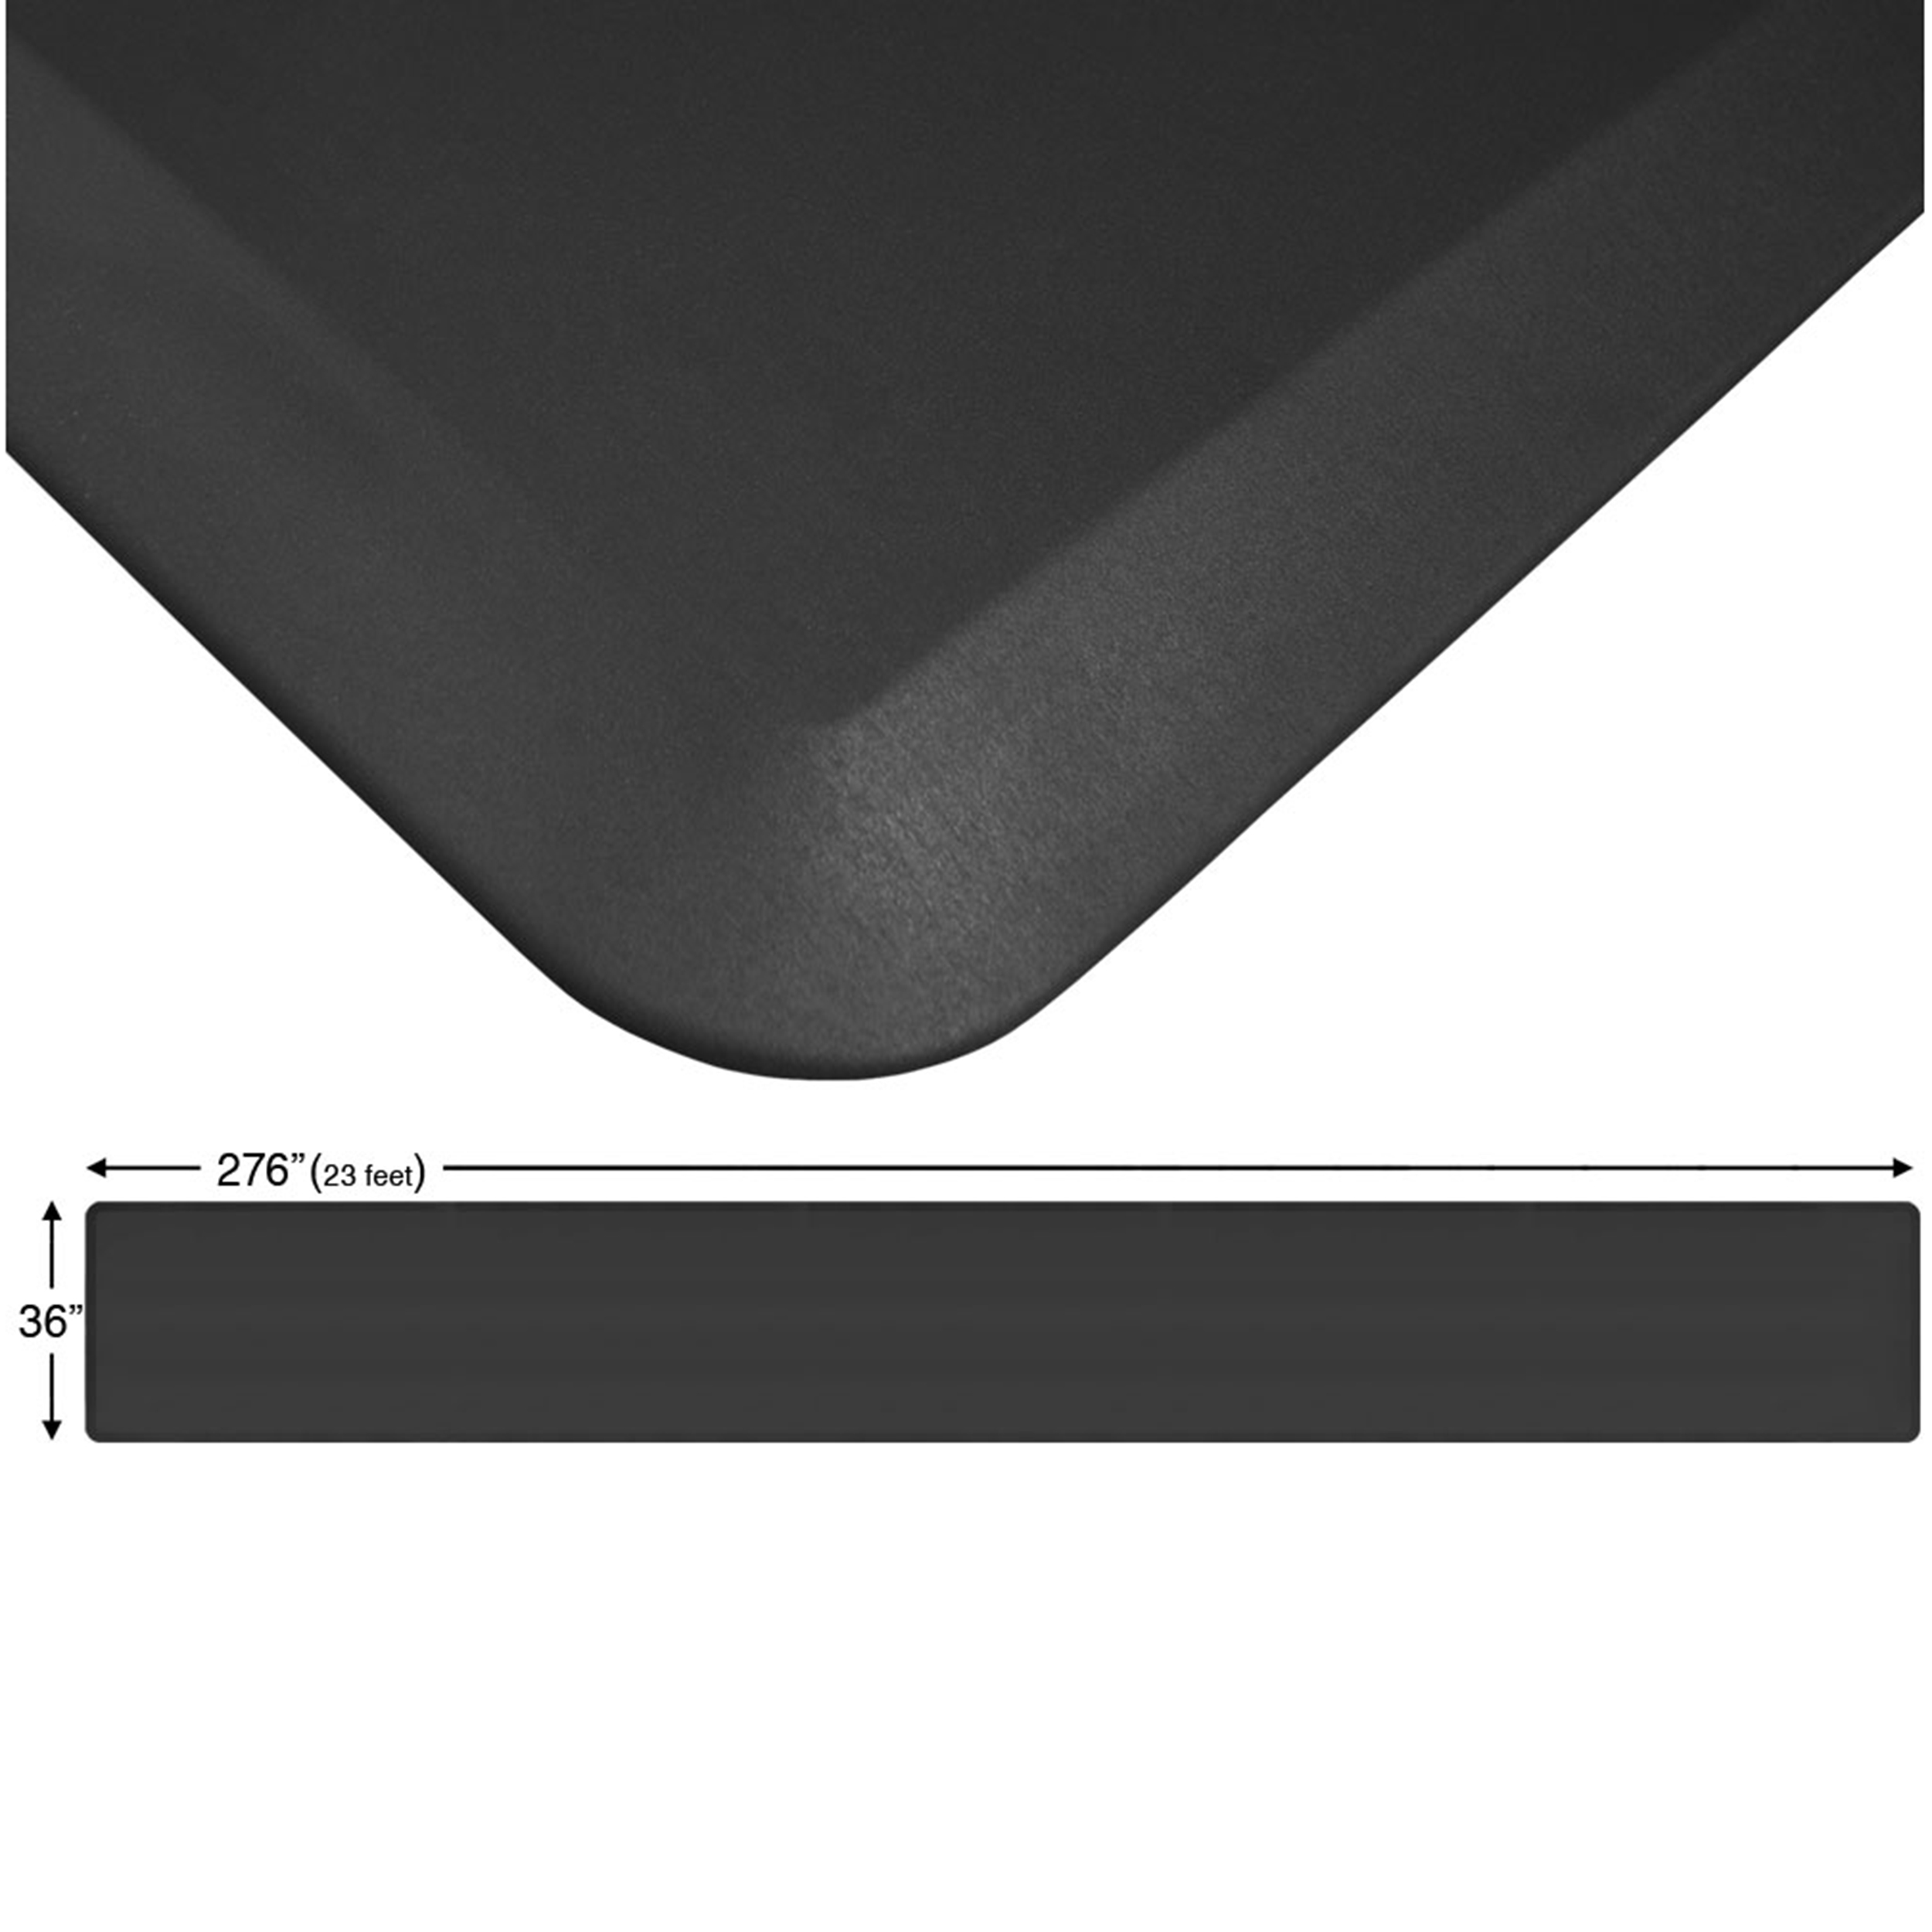 Eco-pro Continuous Comfort Mat, Black, 36" X 276"